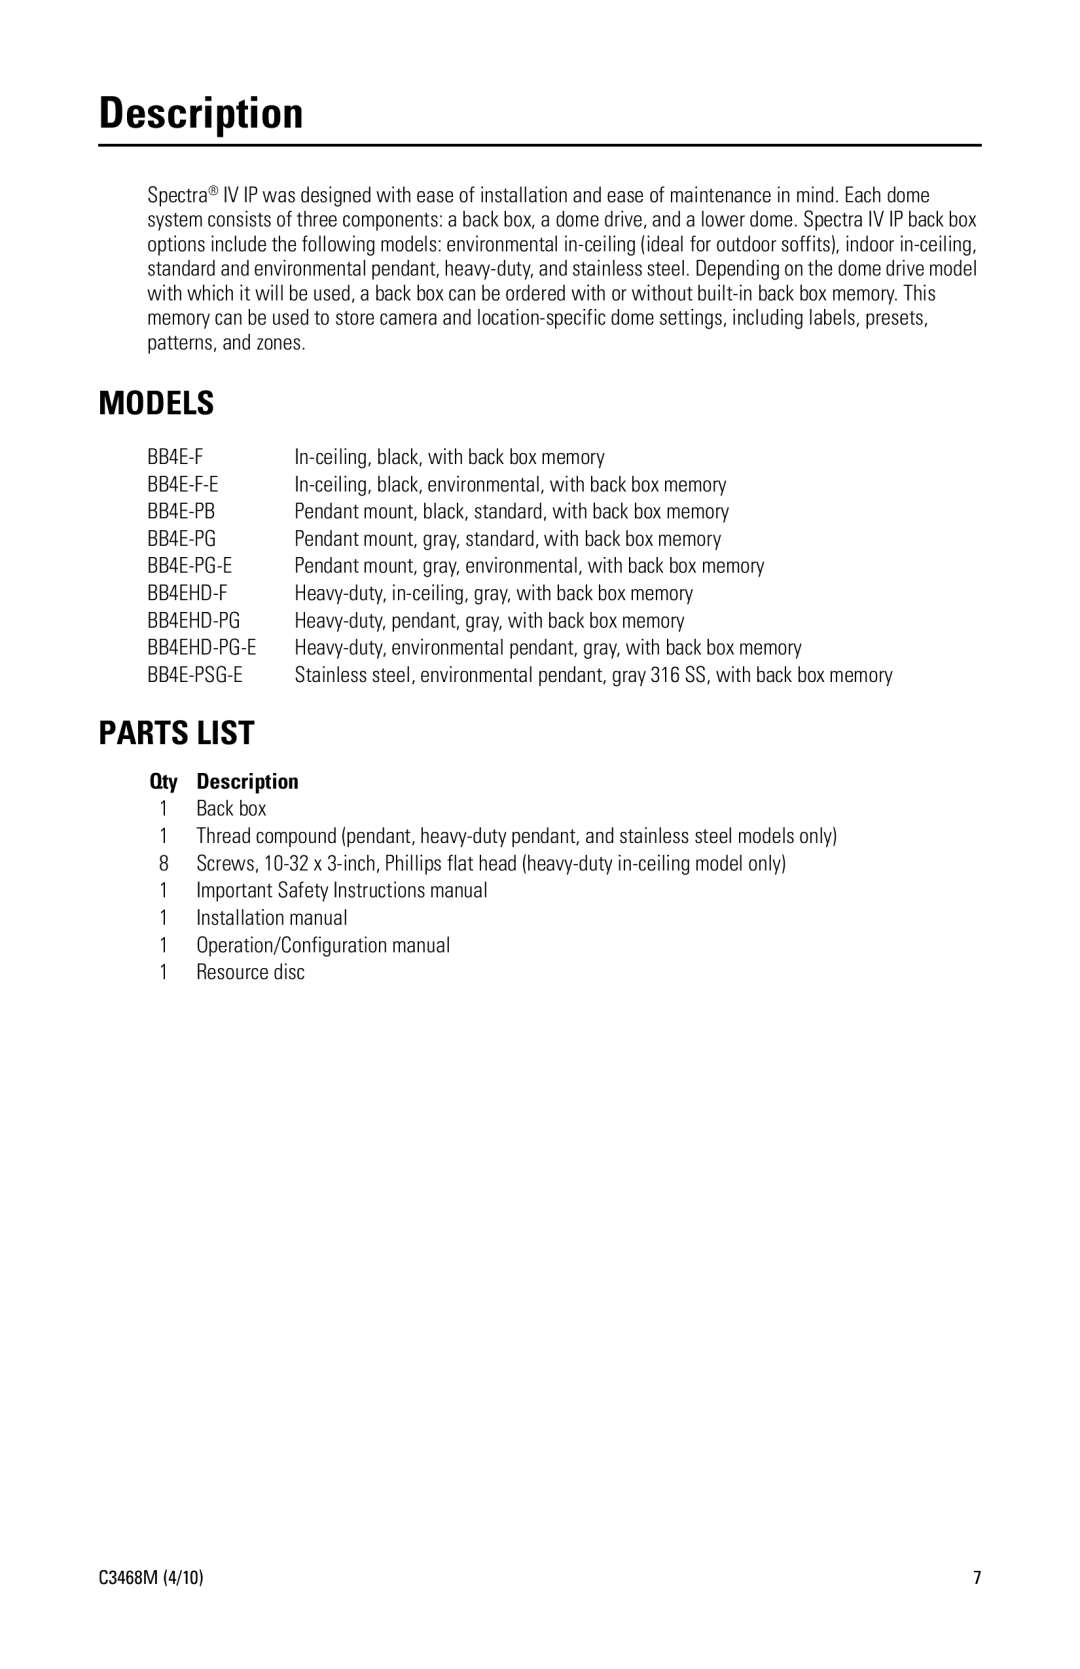 Pelco C3468M manual Models, Parts List, Qty Description 